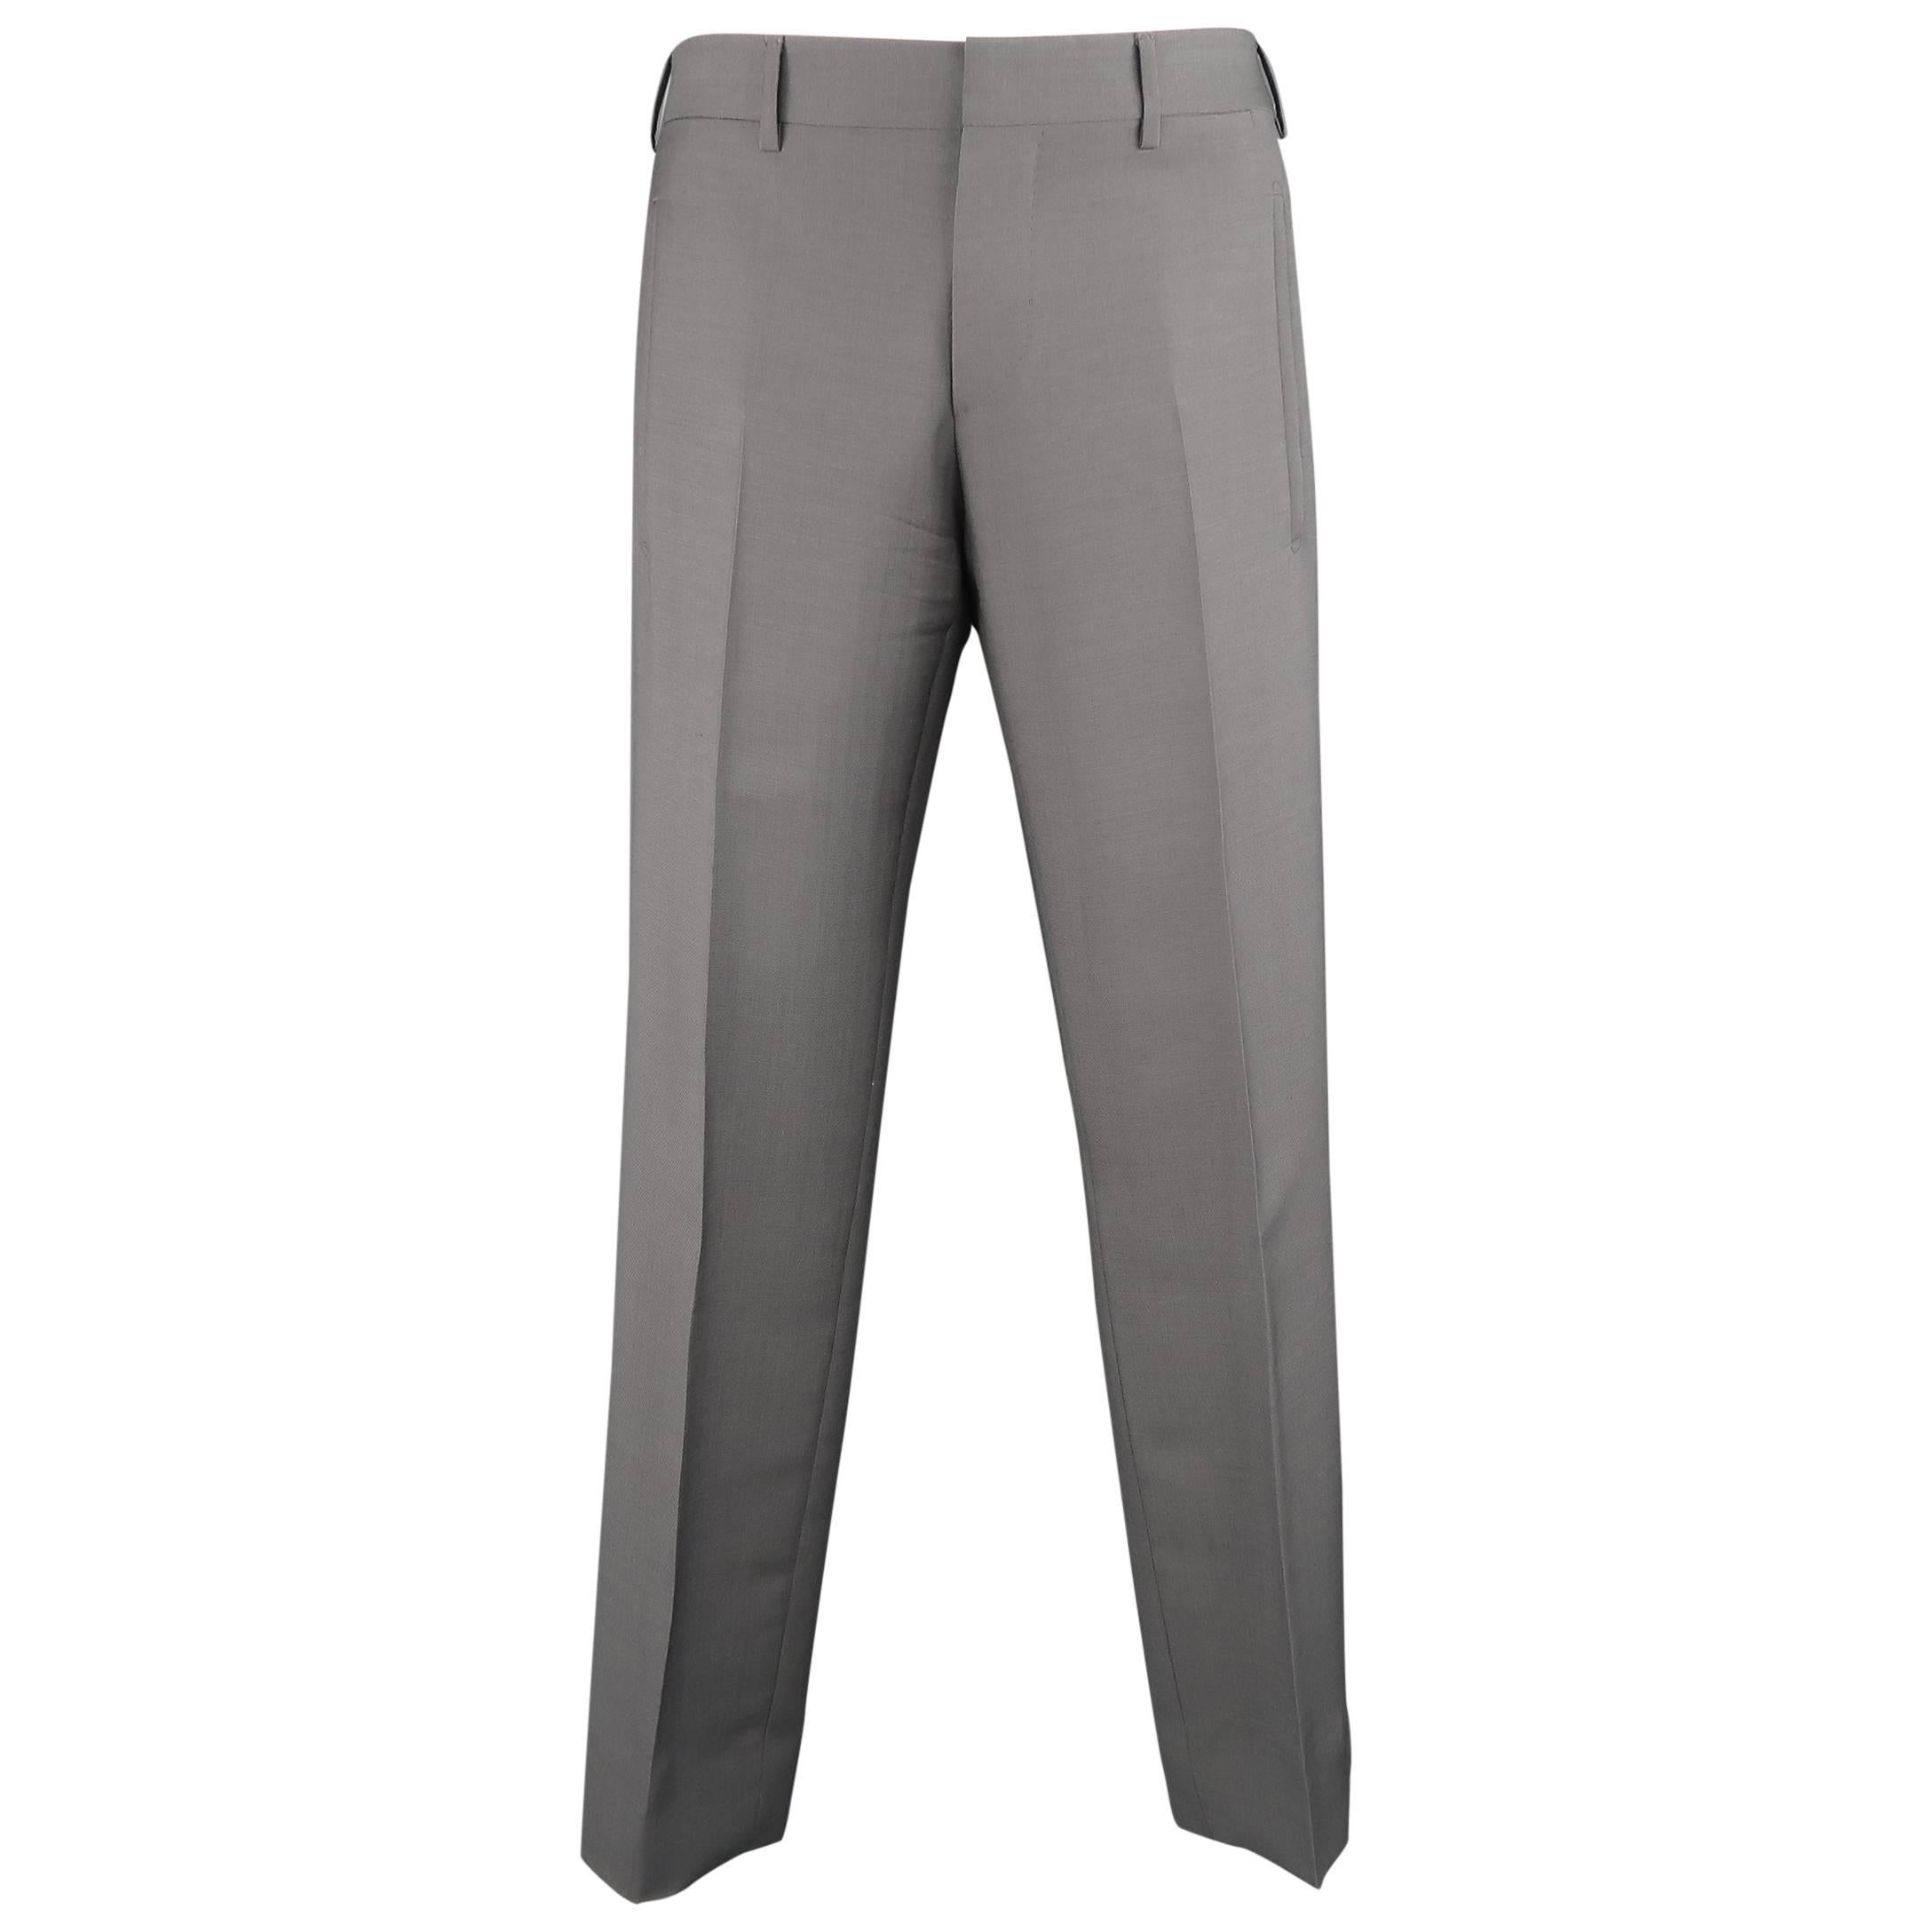 Men's PRADA Size 30 Grey Solid Mohair / Wool Dress Pants